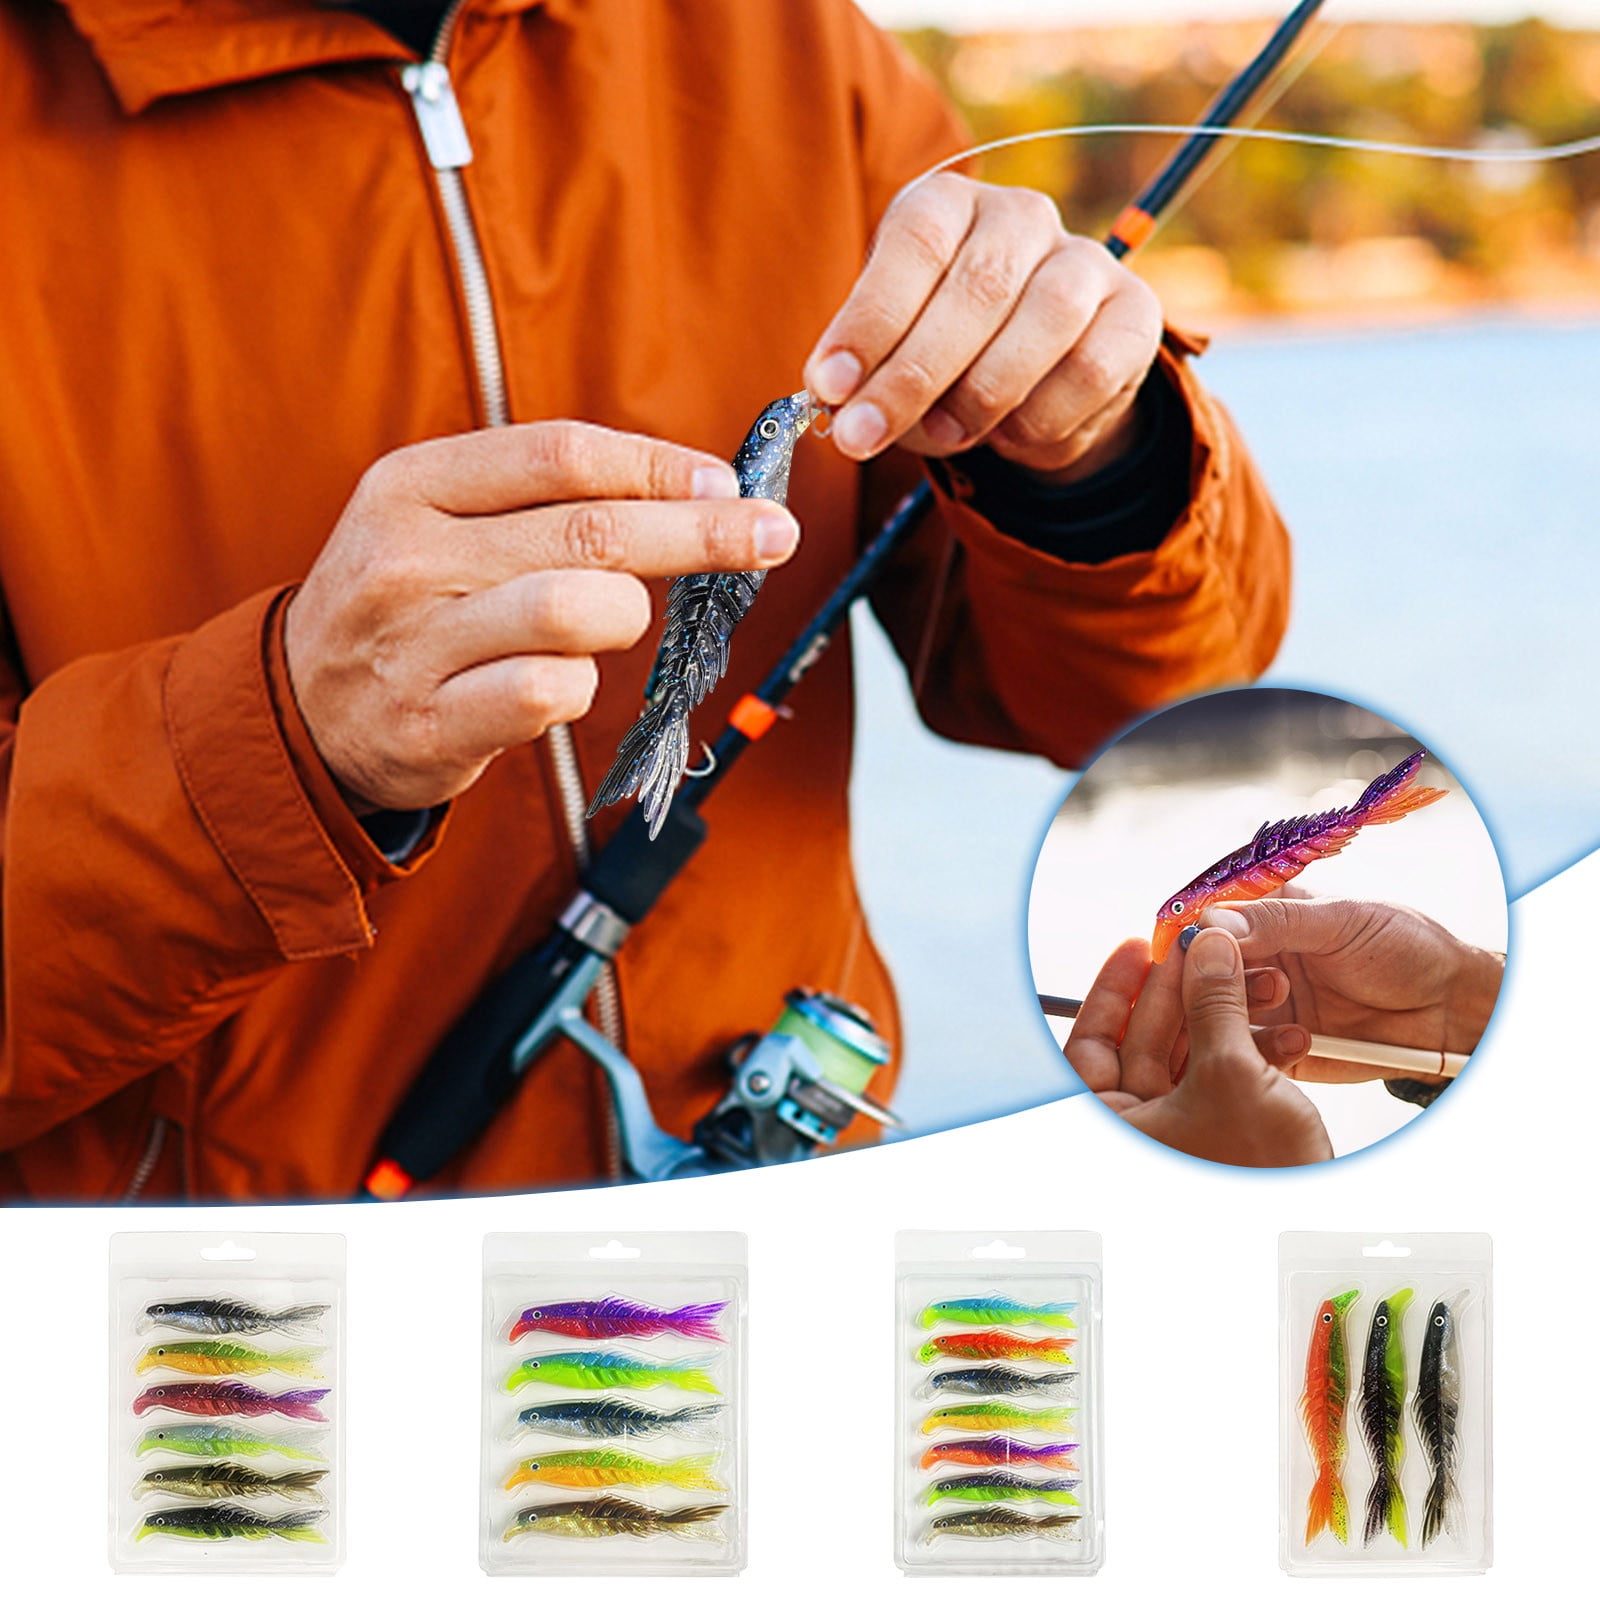 Paddle Tail Swimbaits, Soft Plastic Fishing Lures for Bass Fishing, Swim Shad Bait Minnow Lures Drop Shot Fishing Lures Plastic Baits, Size: 1XL